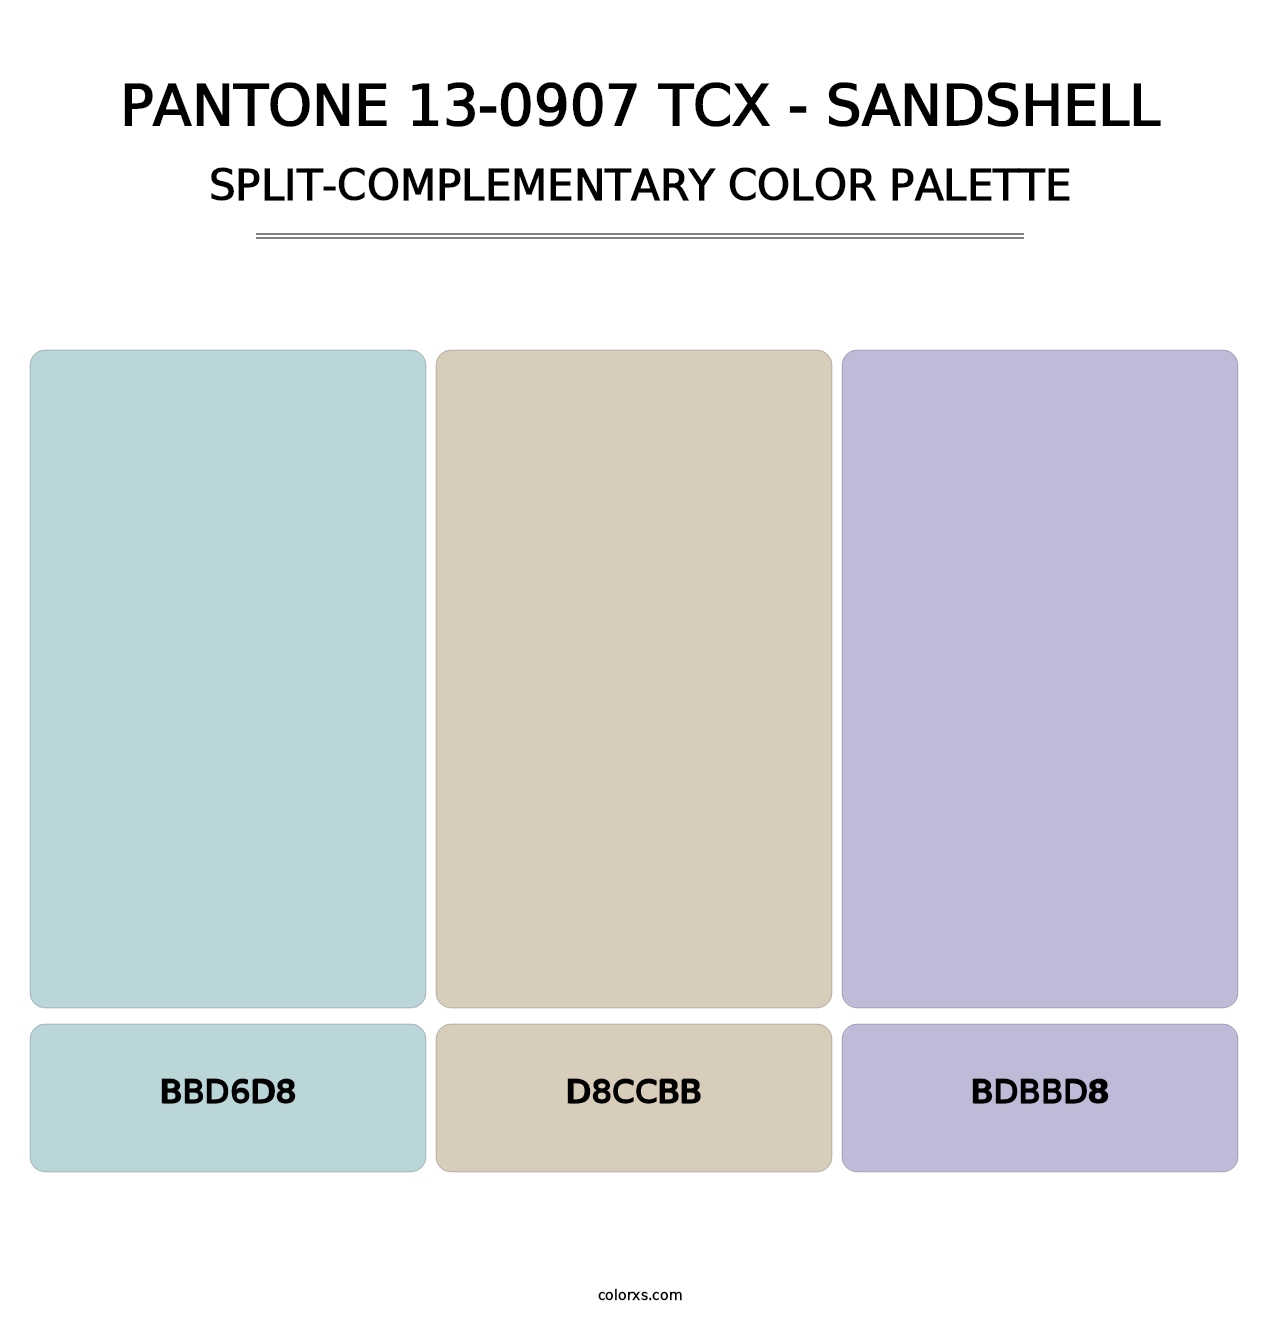 PANTONE 13-0907 TCX - Sandshell - Split-Complementary Color Palette